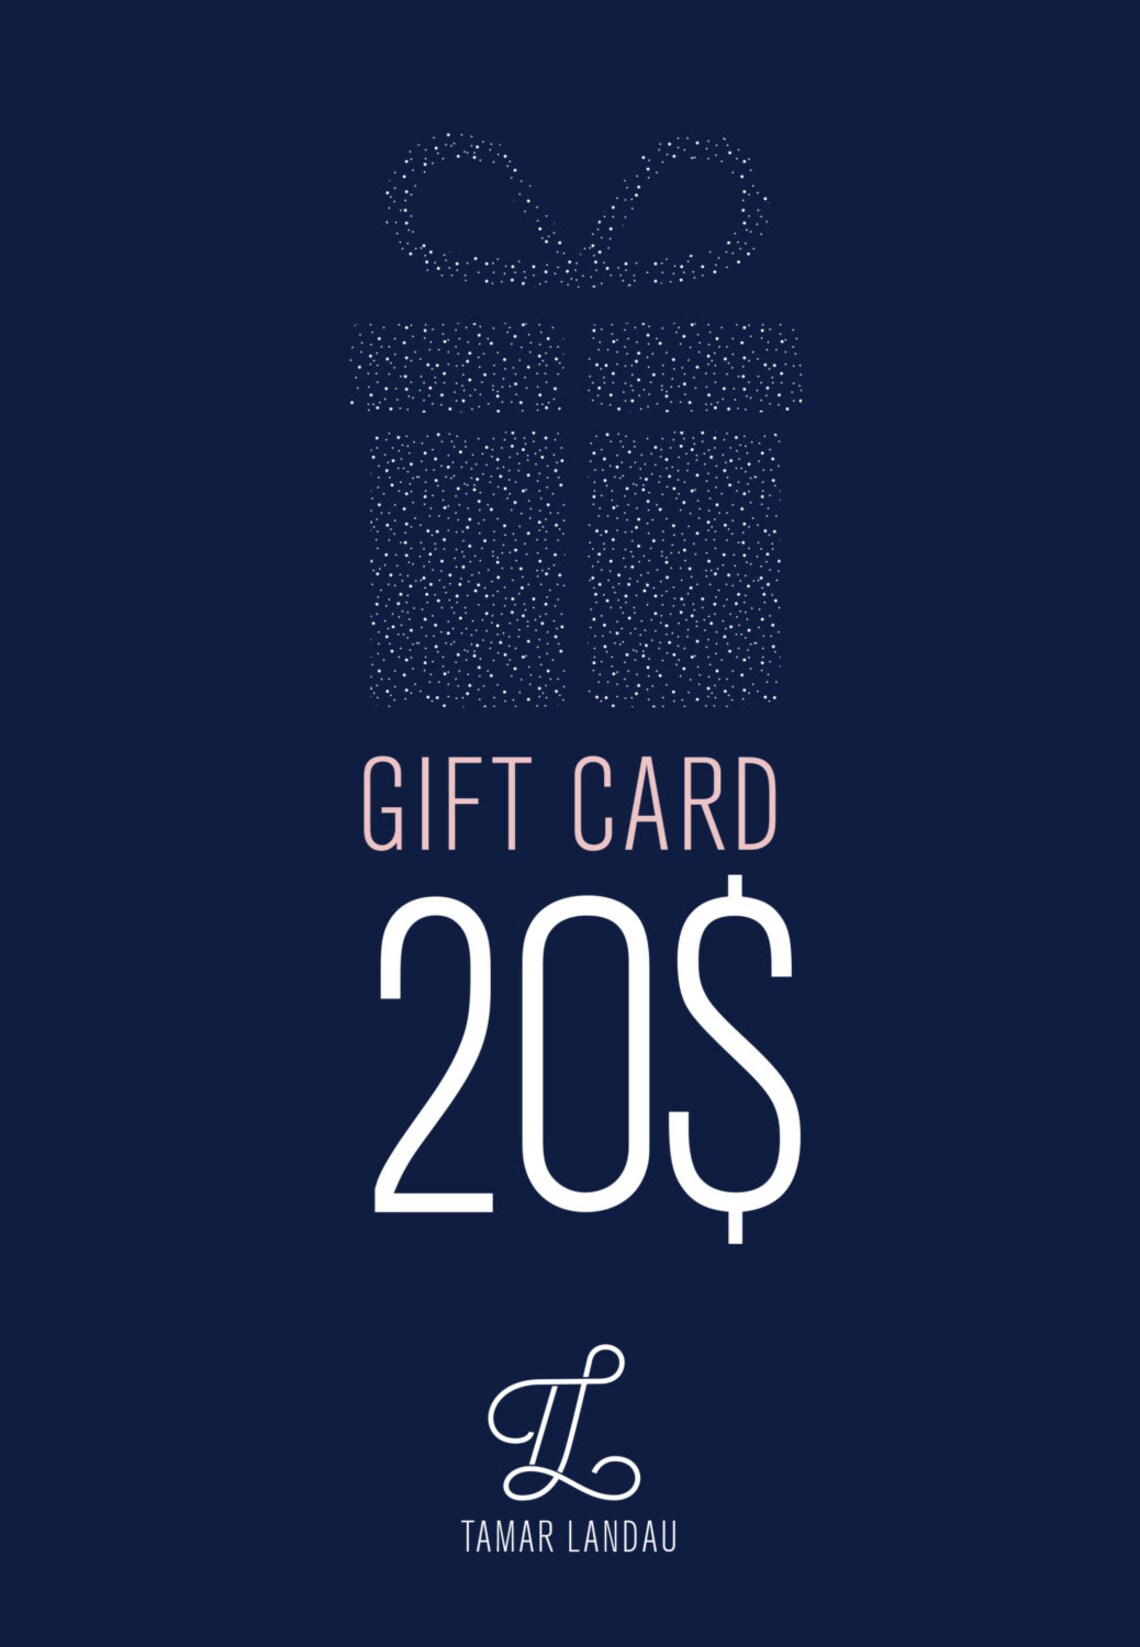 E-gift card of 20 dollars Gift certificate | Etsy